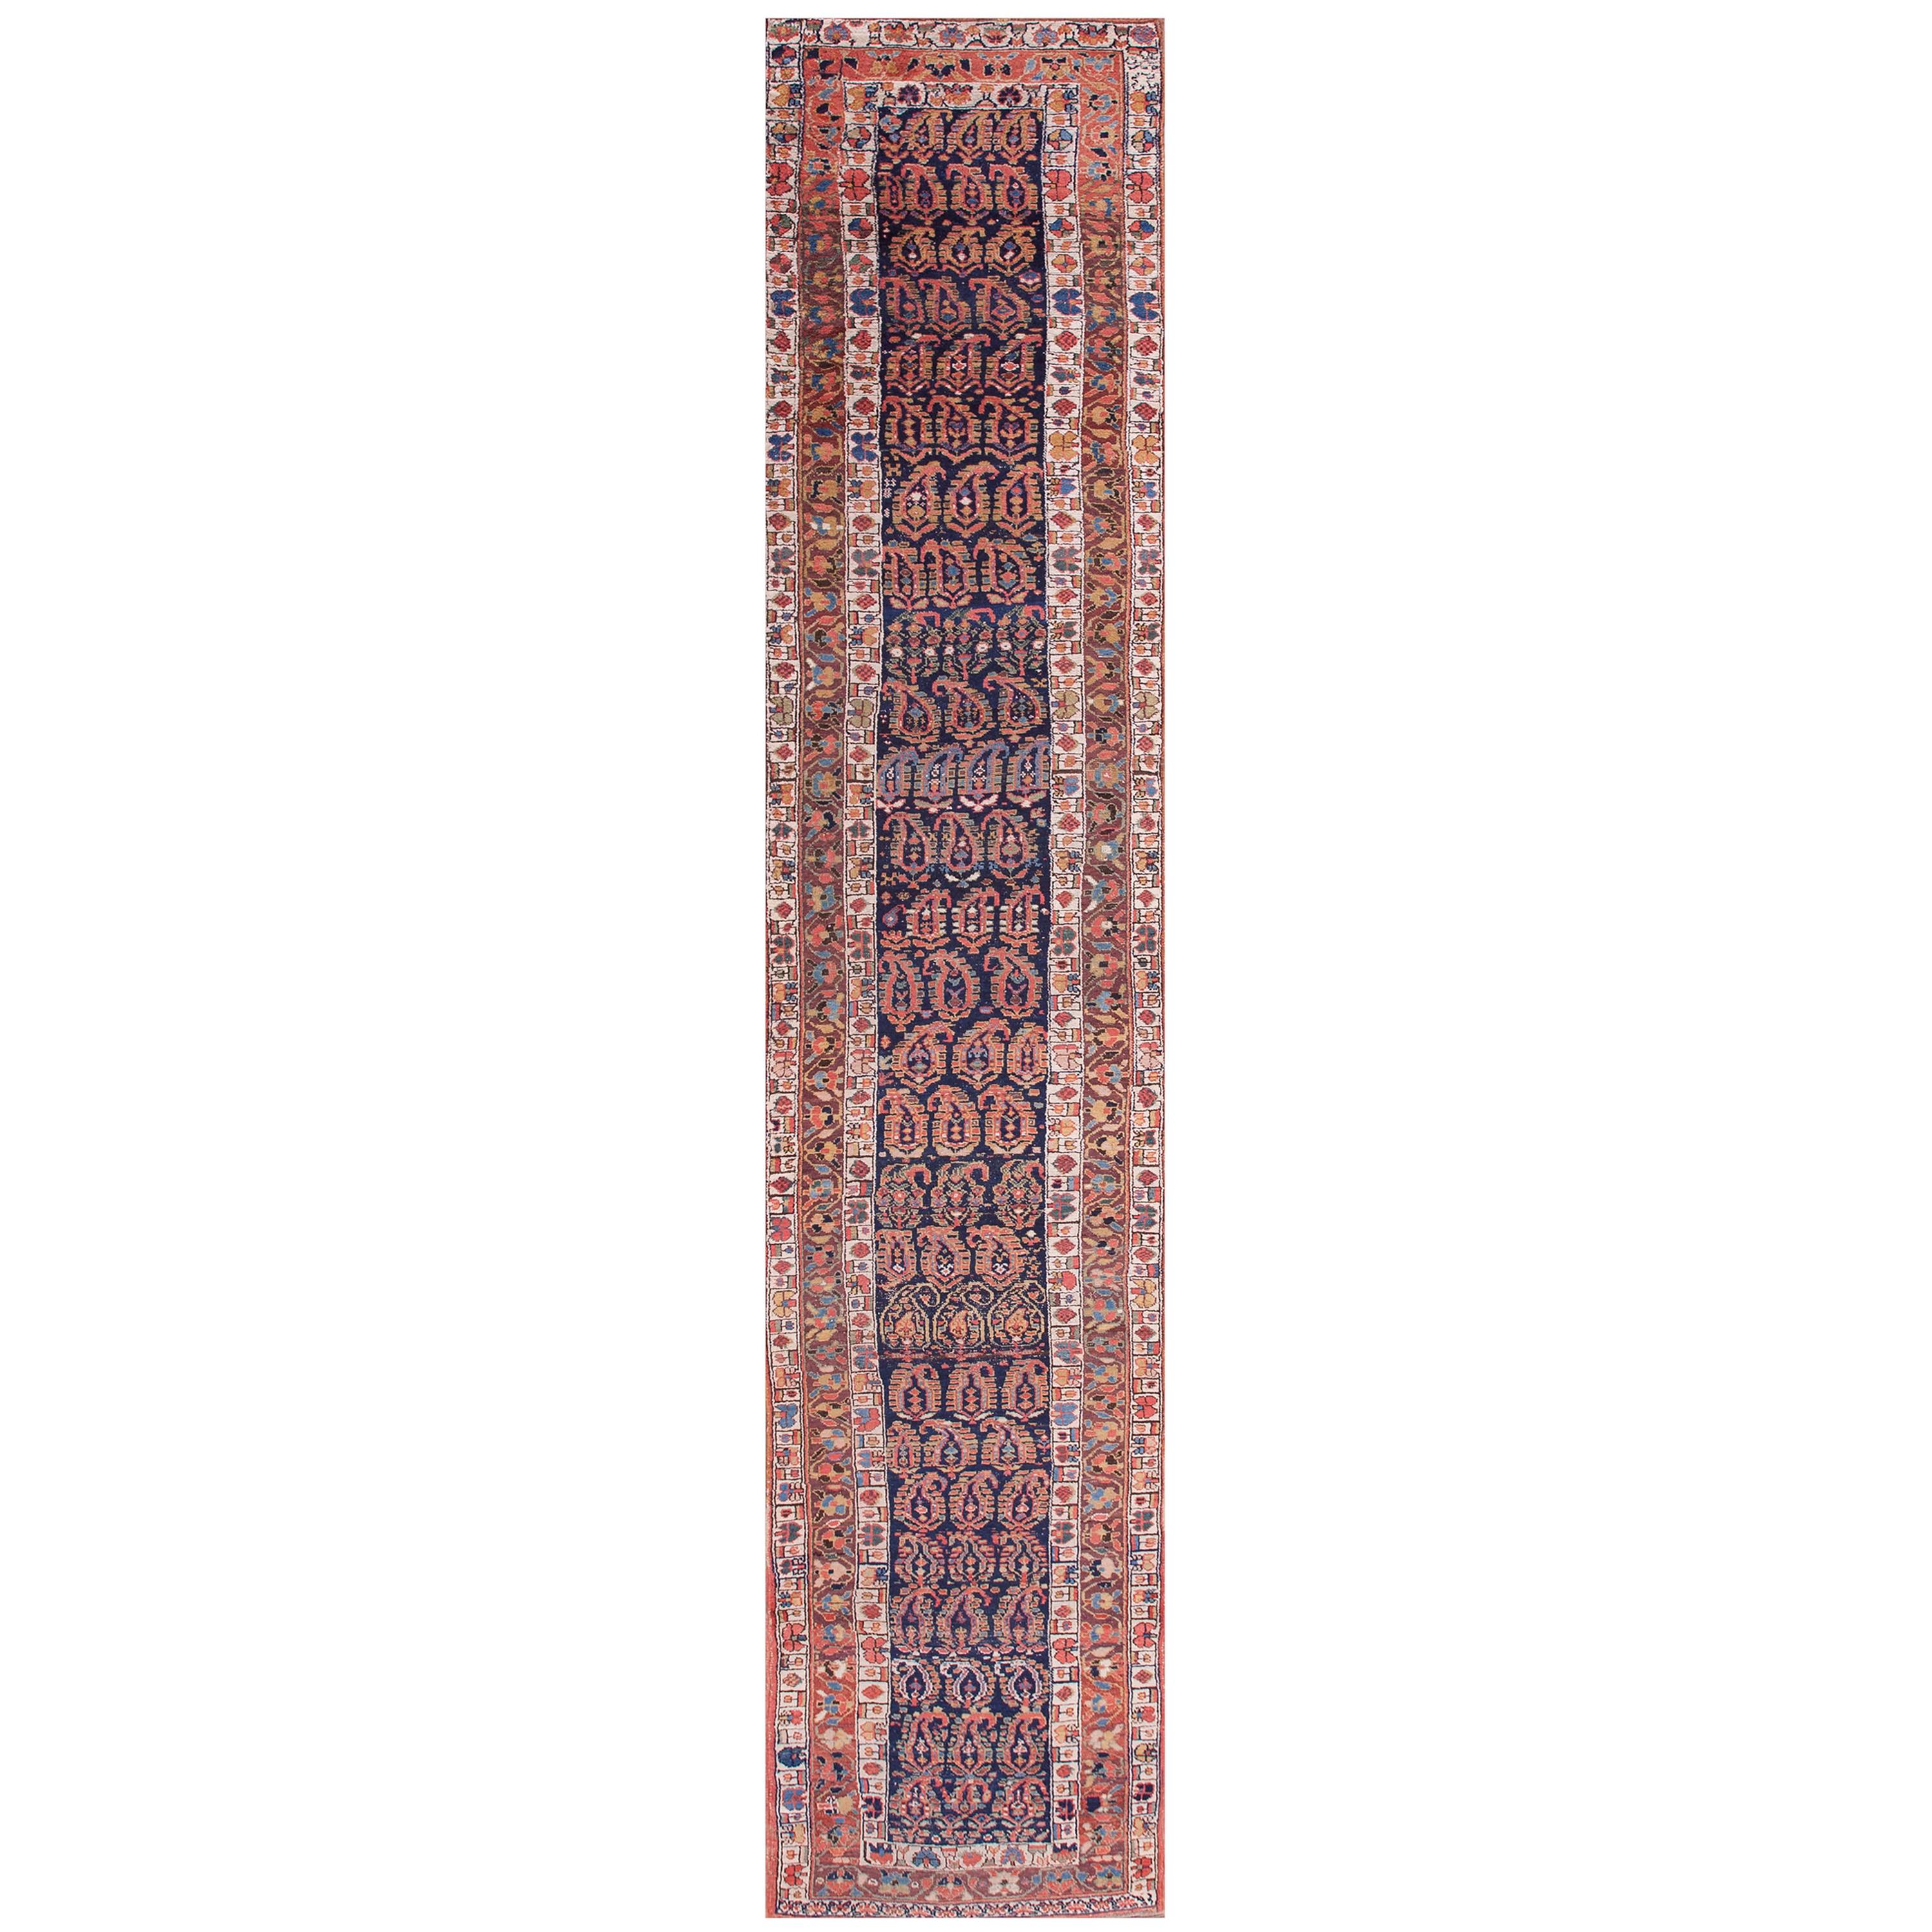 Late 19th Century Persian Kurdish Carpet ( 3'7" x 17'3" - 109 x 526 )